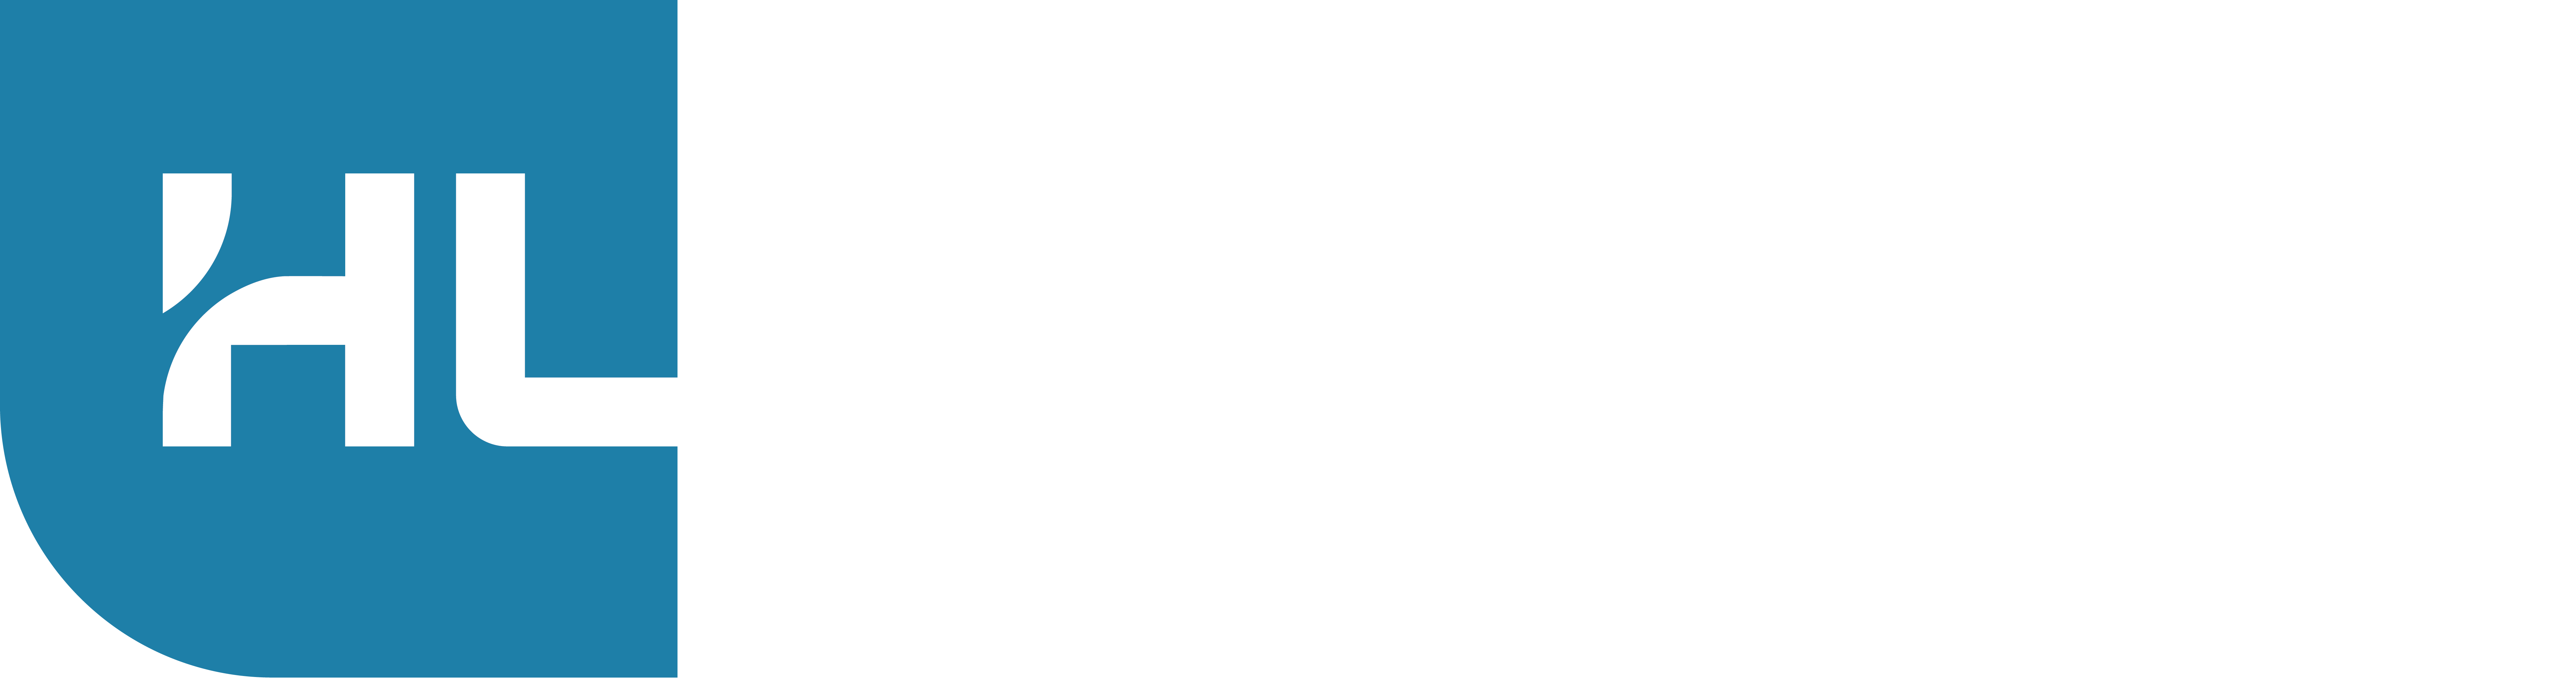 Hamilton Lane logo